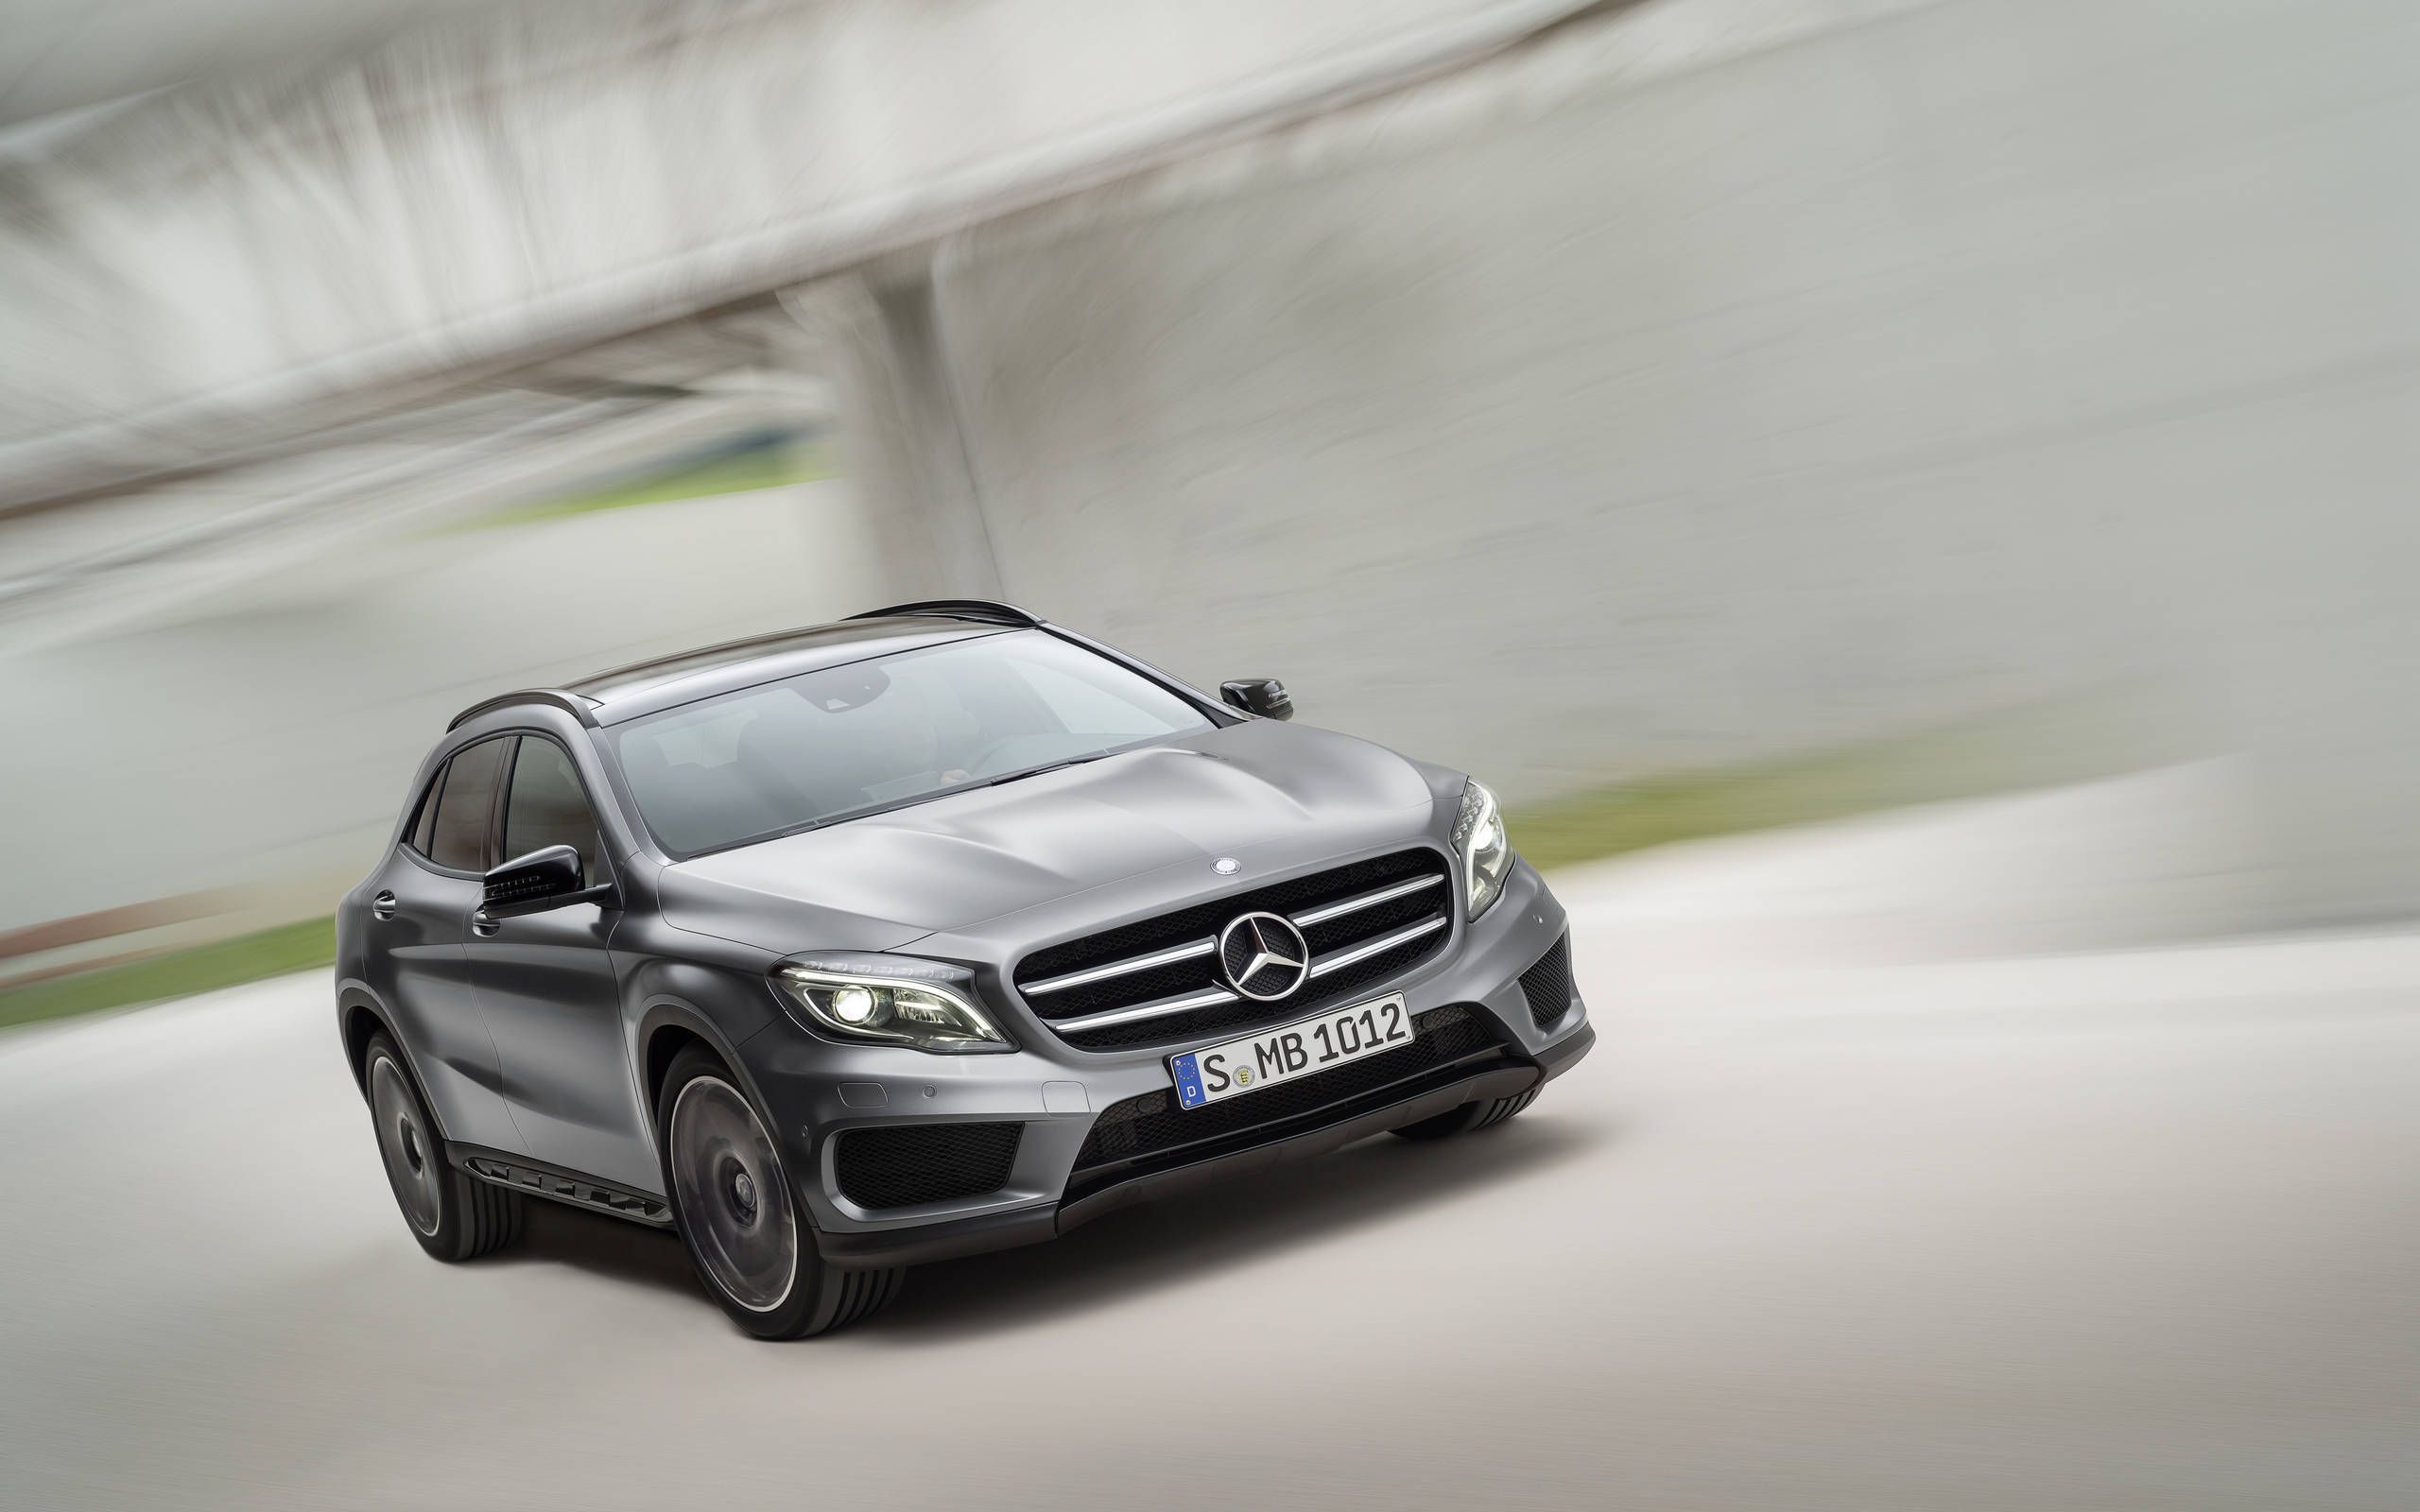 2015 Mercedes-Benz GLA250 4Matic review notes